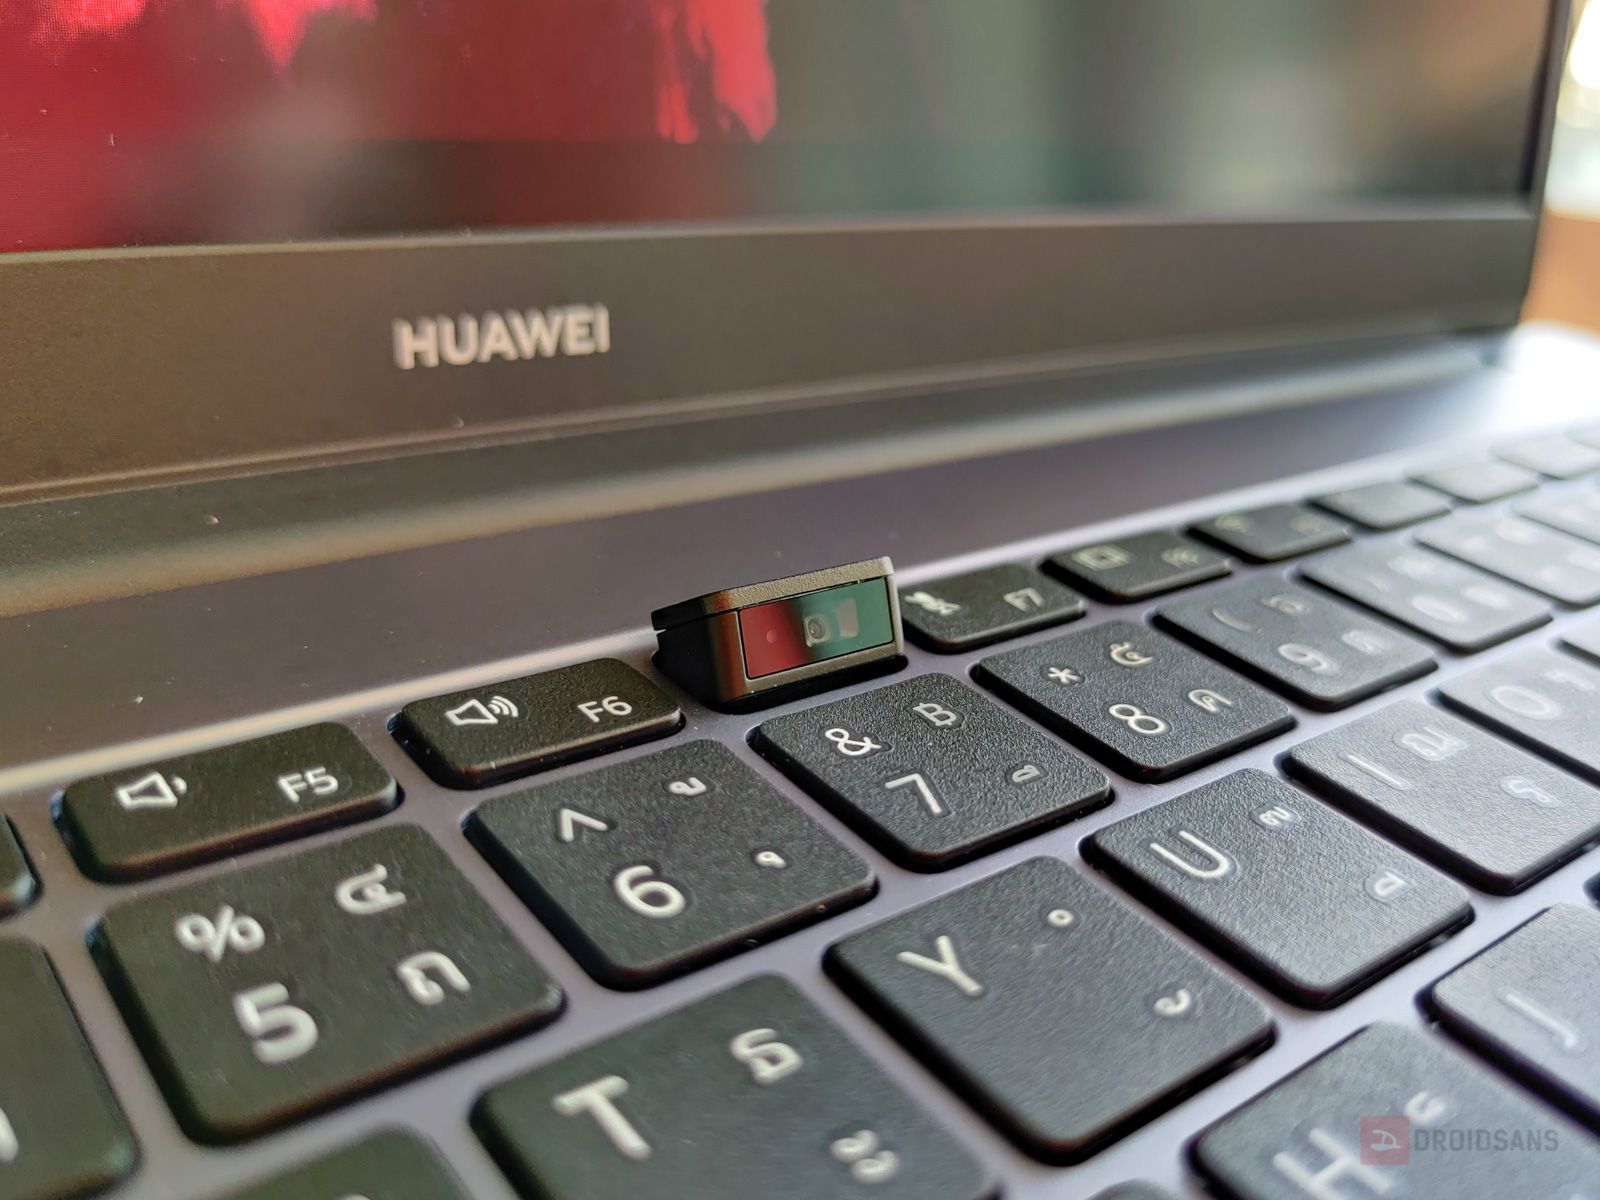 Review | รีวิว Huawei MateBook D15 โน้ตบุ๊คสายทำงาน ชิป Ryzen 5 ชาร์จไฟ USB Type C งานประกอบเยี่ยม ราคา 17,990 บาท